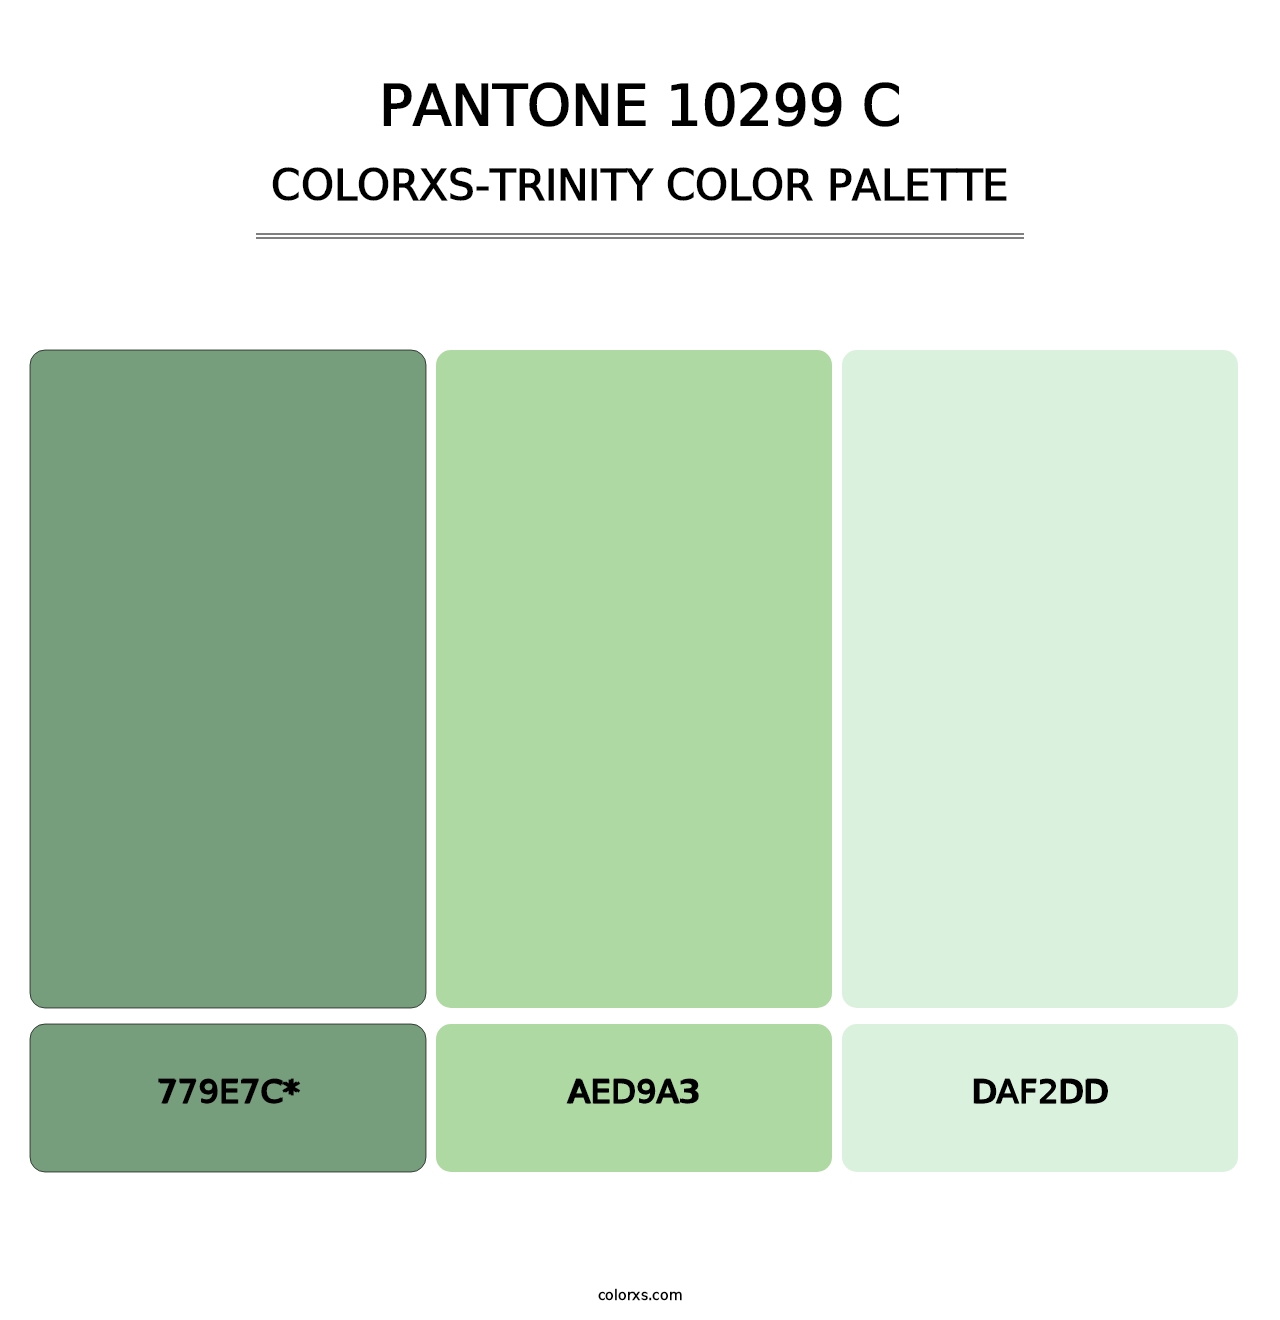 PANTONE 10299 C - Colorxs Trinity Palette